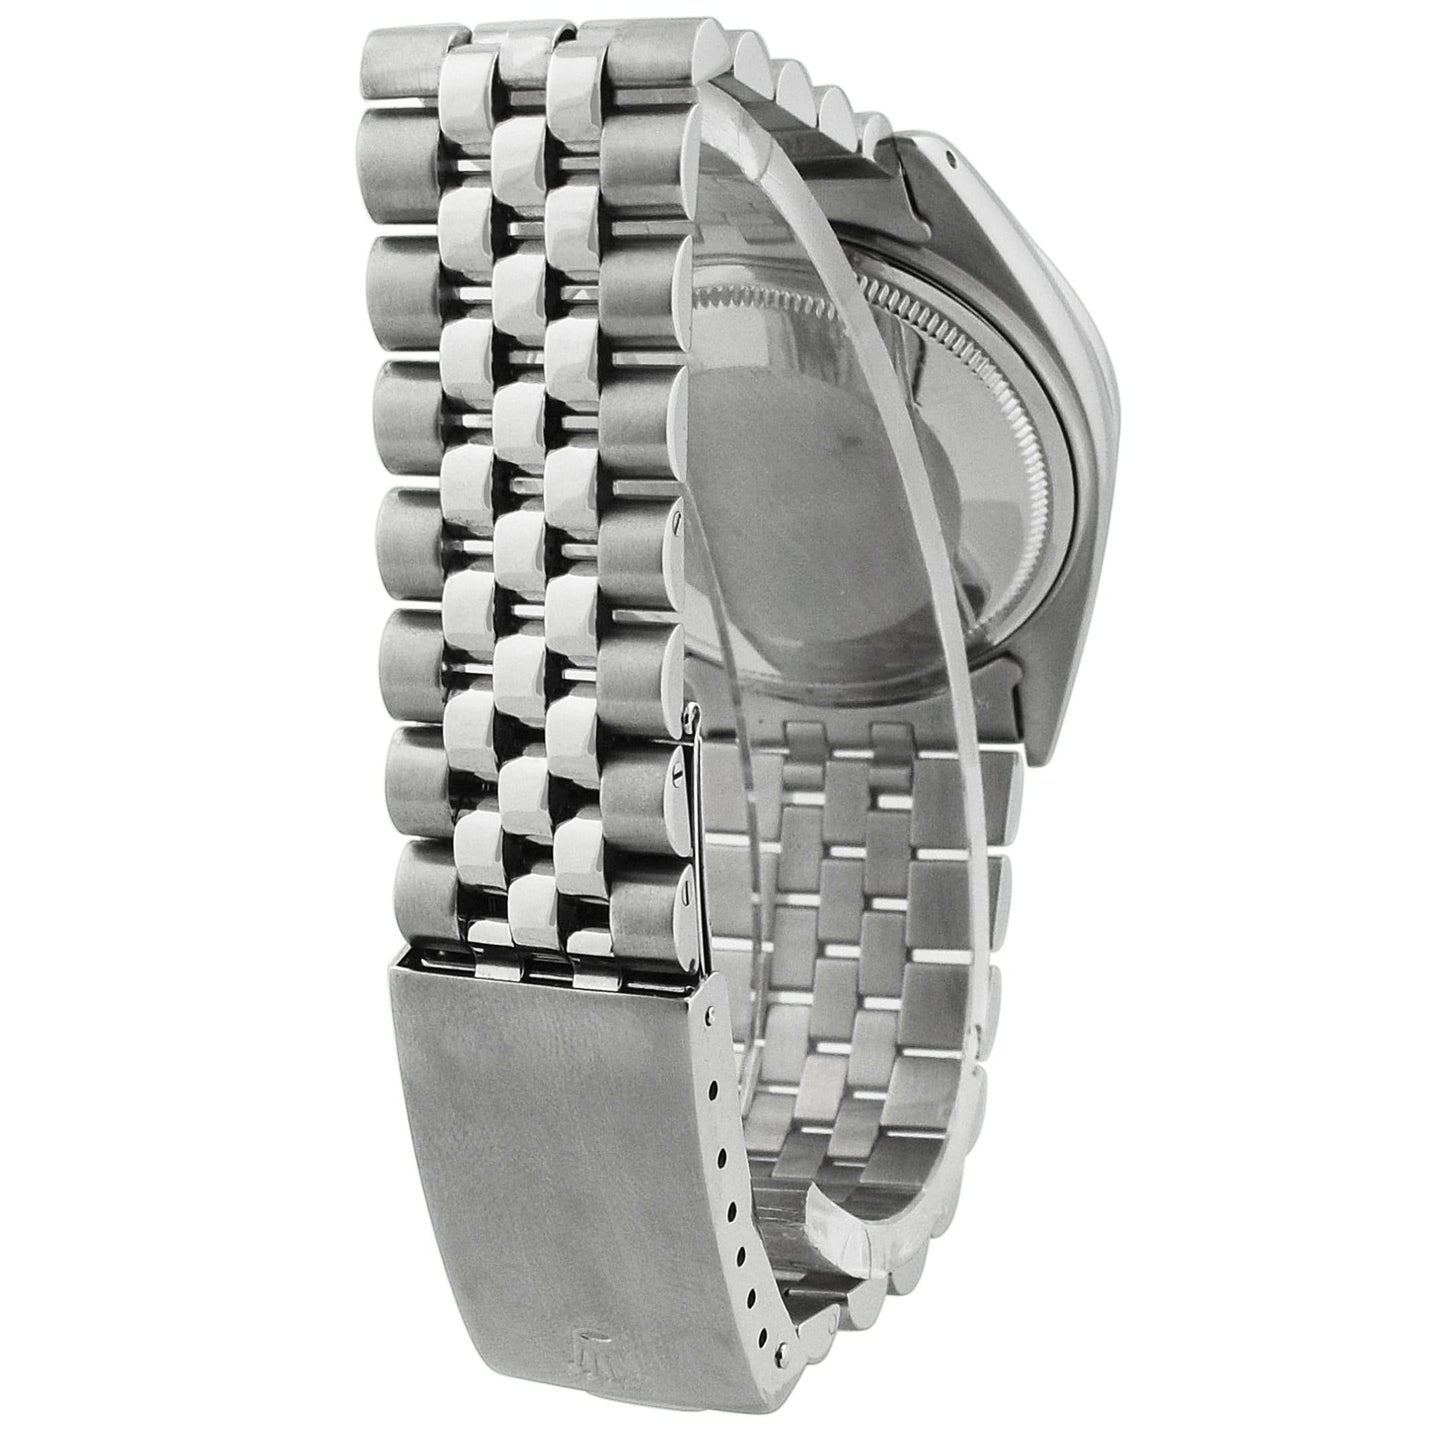 Rolex Datejust Stainless Steel 36mm Factory Diamond Dot Dial Watch Reference# 16014 - Happy Jewelers Fine Jewelry Lifetime Warranty